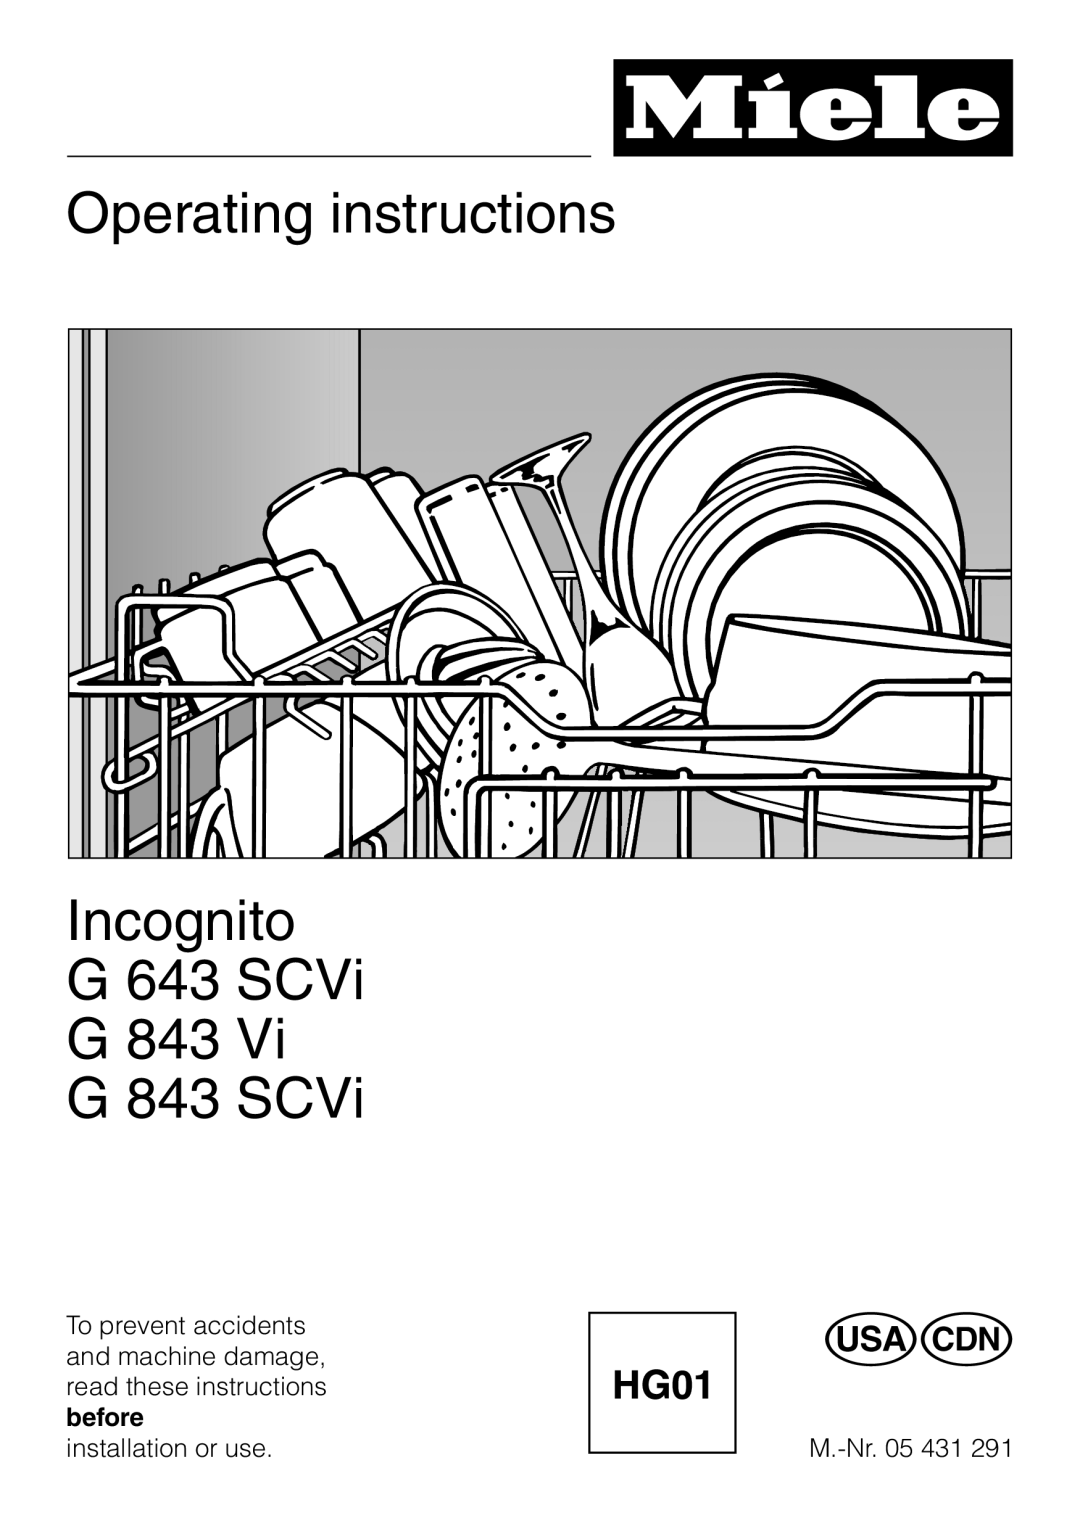 Miele G843SCVI, G843VI, G643SCVI manual Operating instructions, Incognito G 643 SCVi G 843 G 843 SCVi 